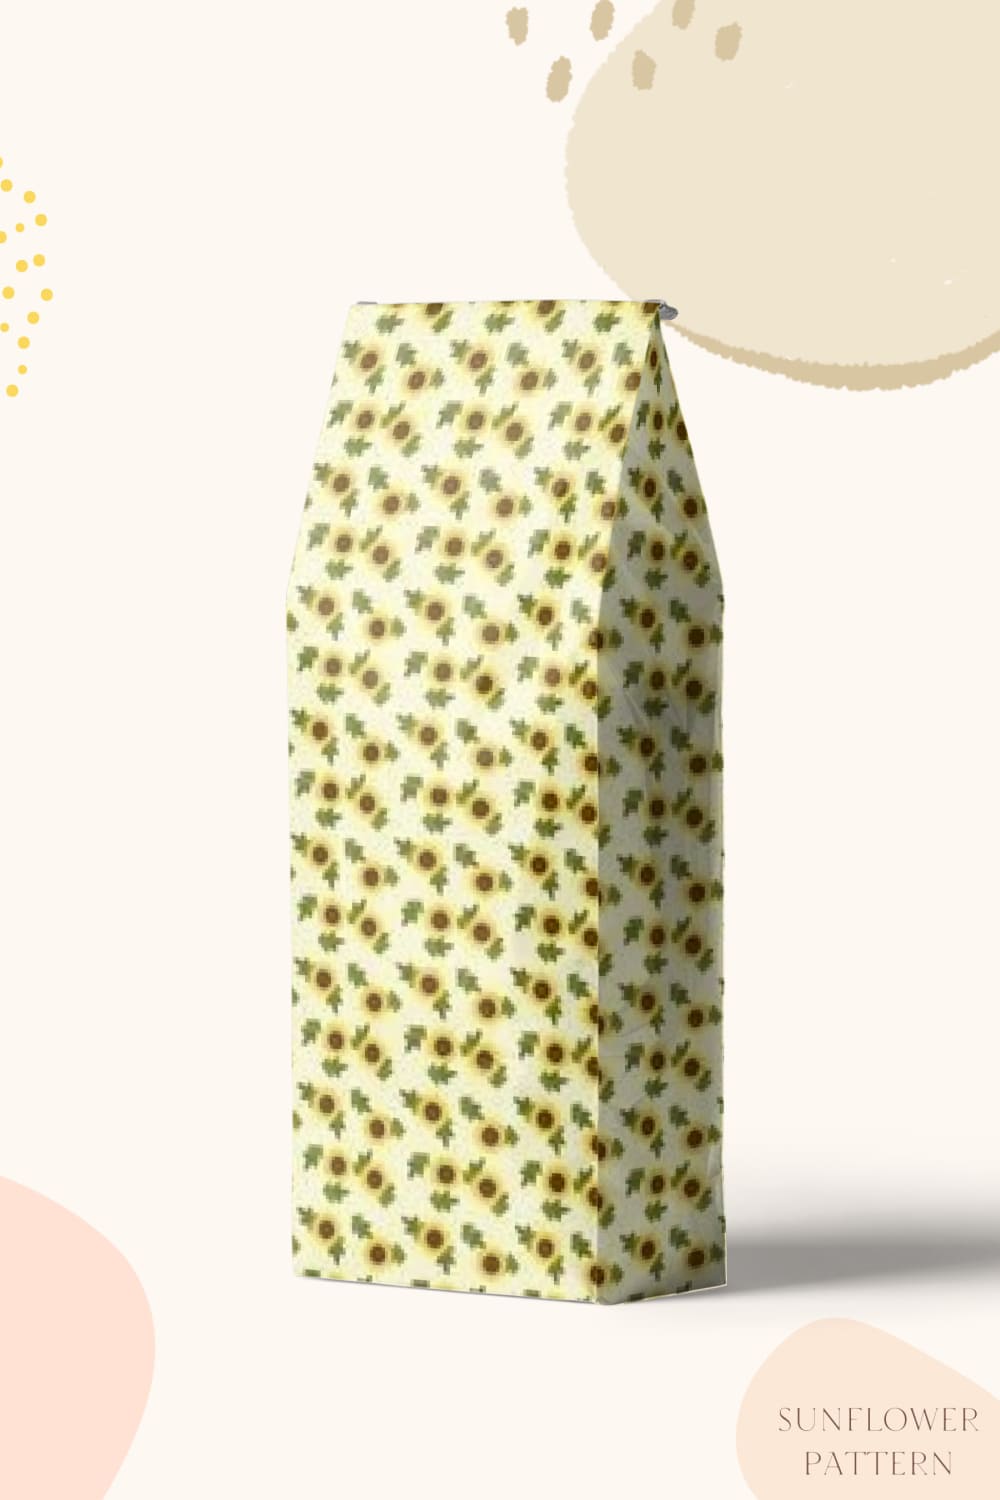 Sunflower Seamless Pattern Background - Pinterest.